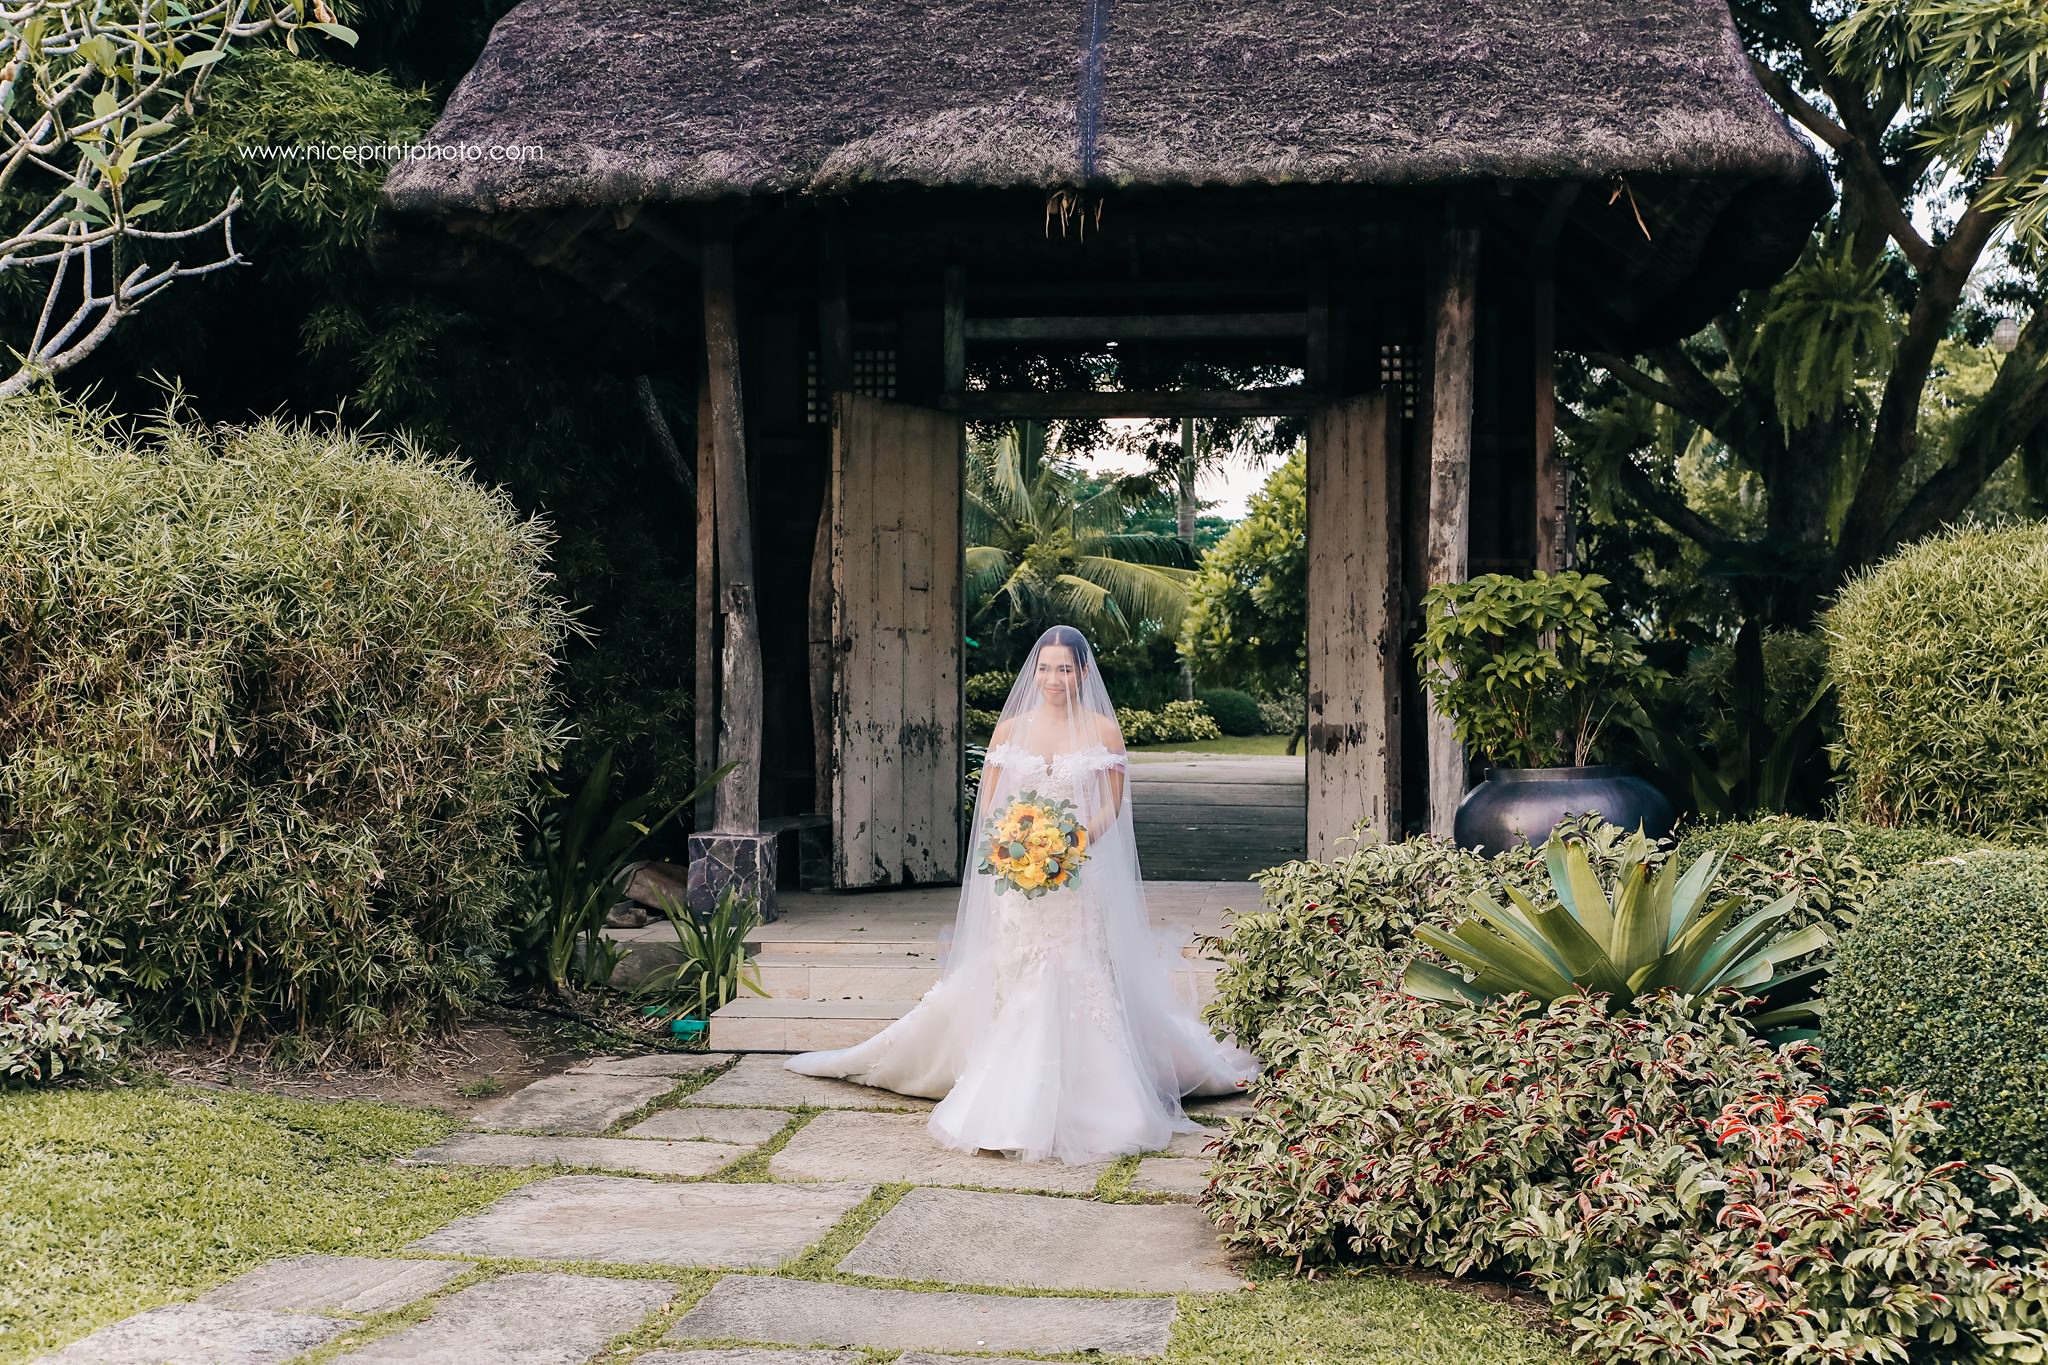 Batangas Ever After features Mark Zambrano and Aicelle Santos sunflower themed wedding in El Jardin de Zaida, San Juan, Batangas